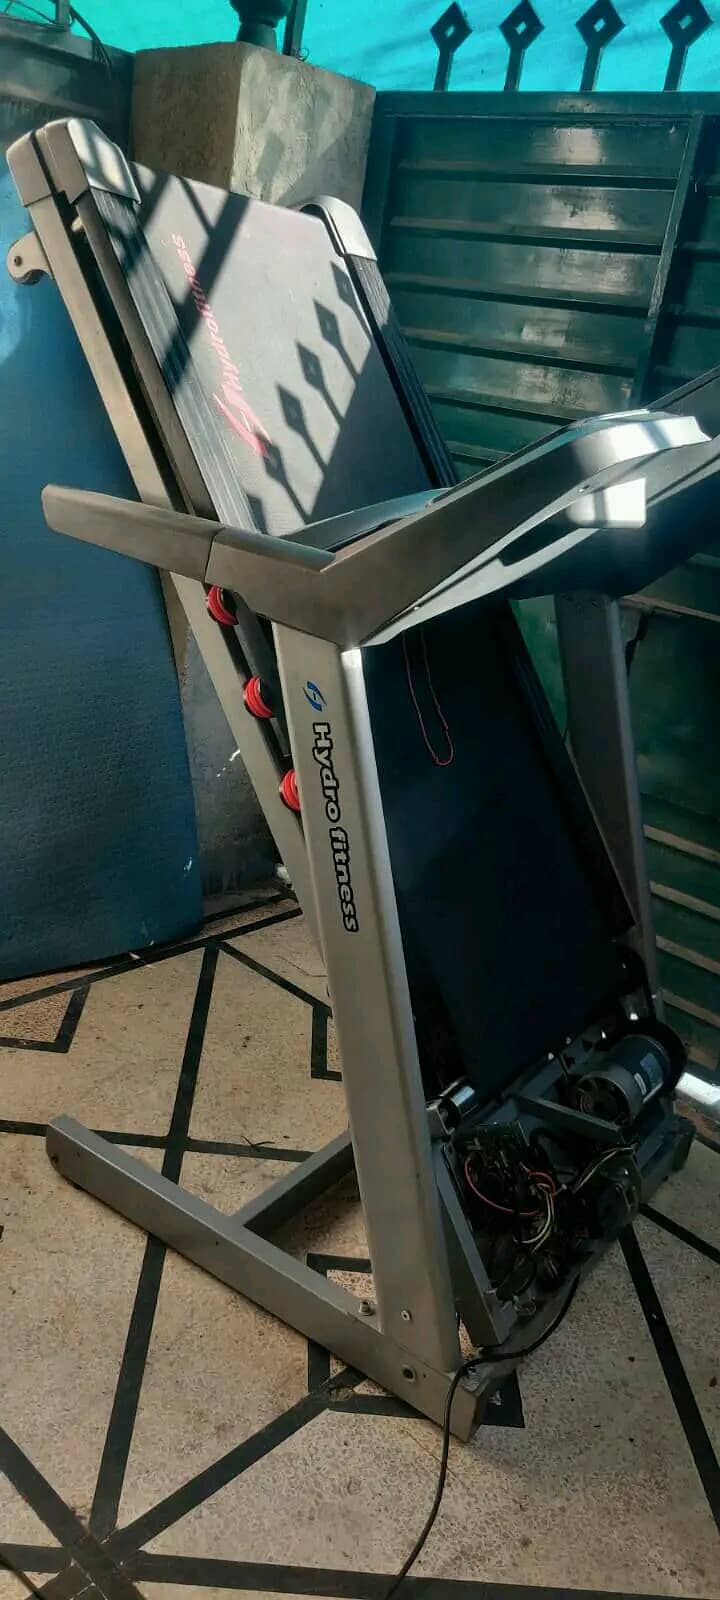 Hydro fitness treadmill for sale 0316/1736/128 whatsapp 9